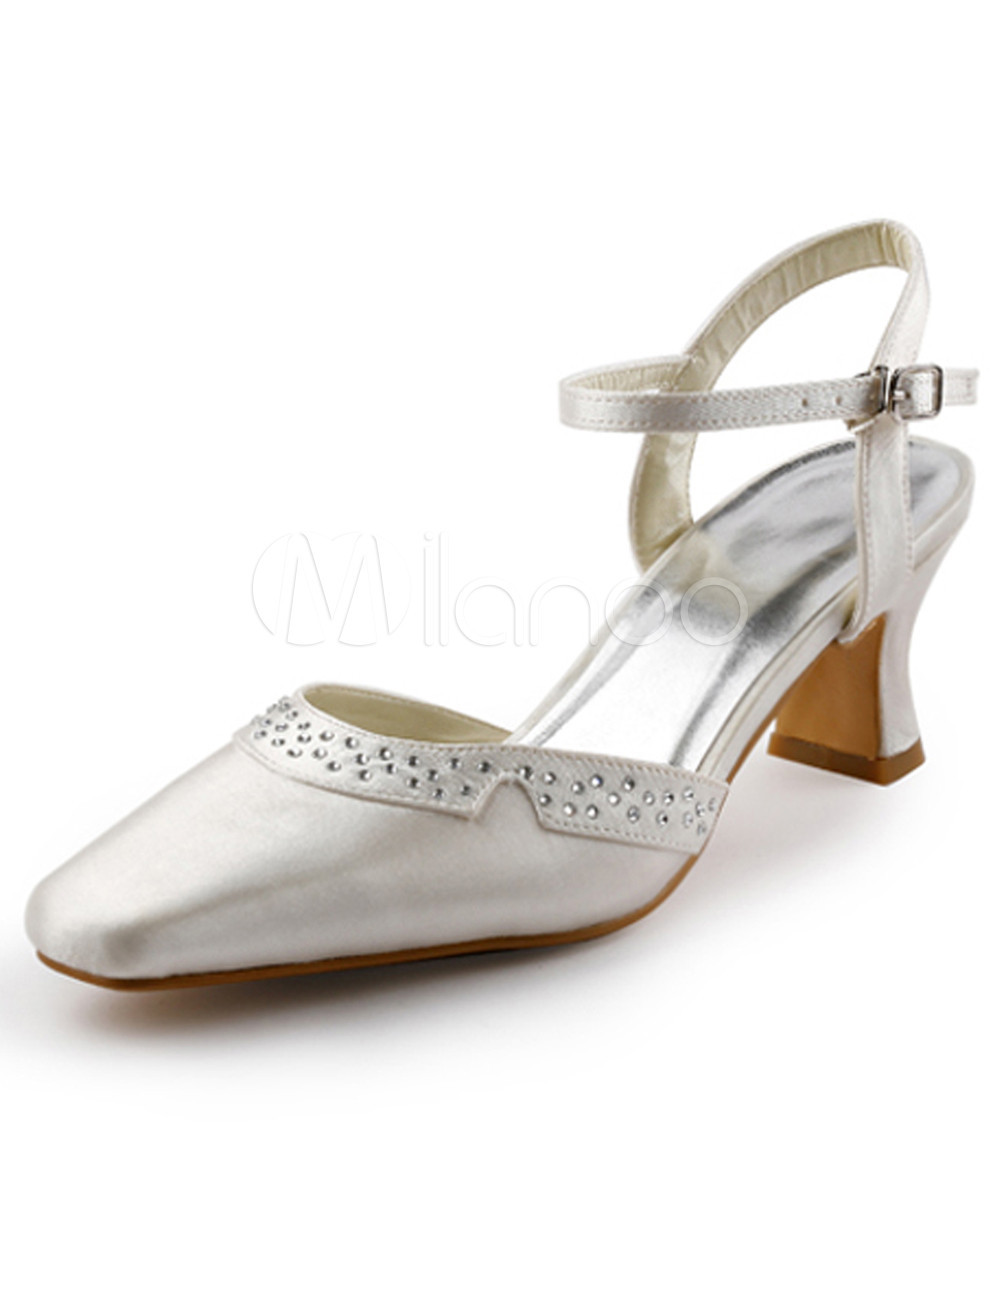 Vintage Wedding Shoes Low Heel
 Vintage White Satin Low Heel Wedding Shoes Milanoo